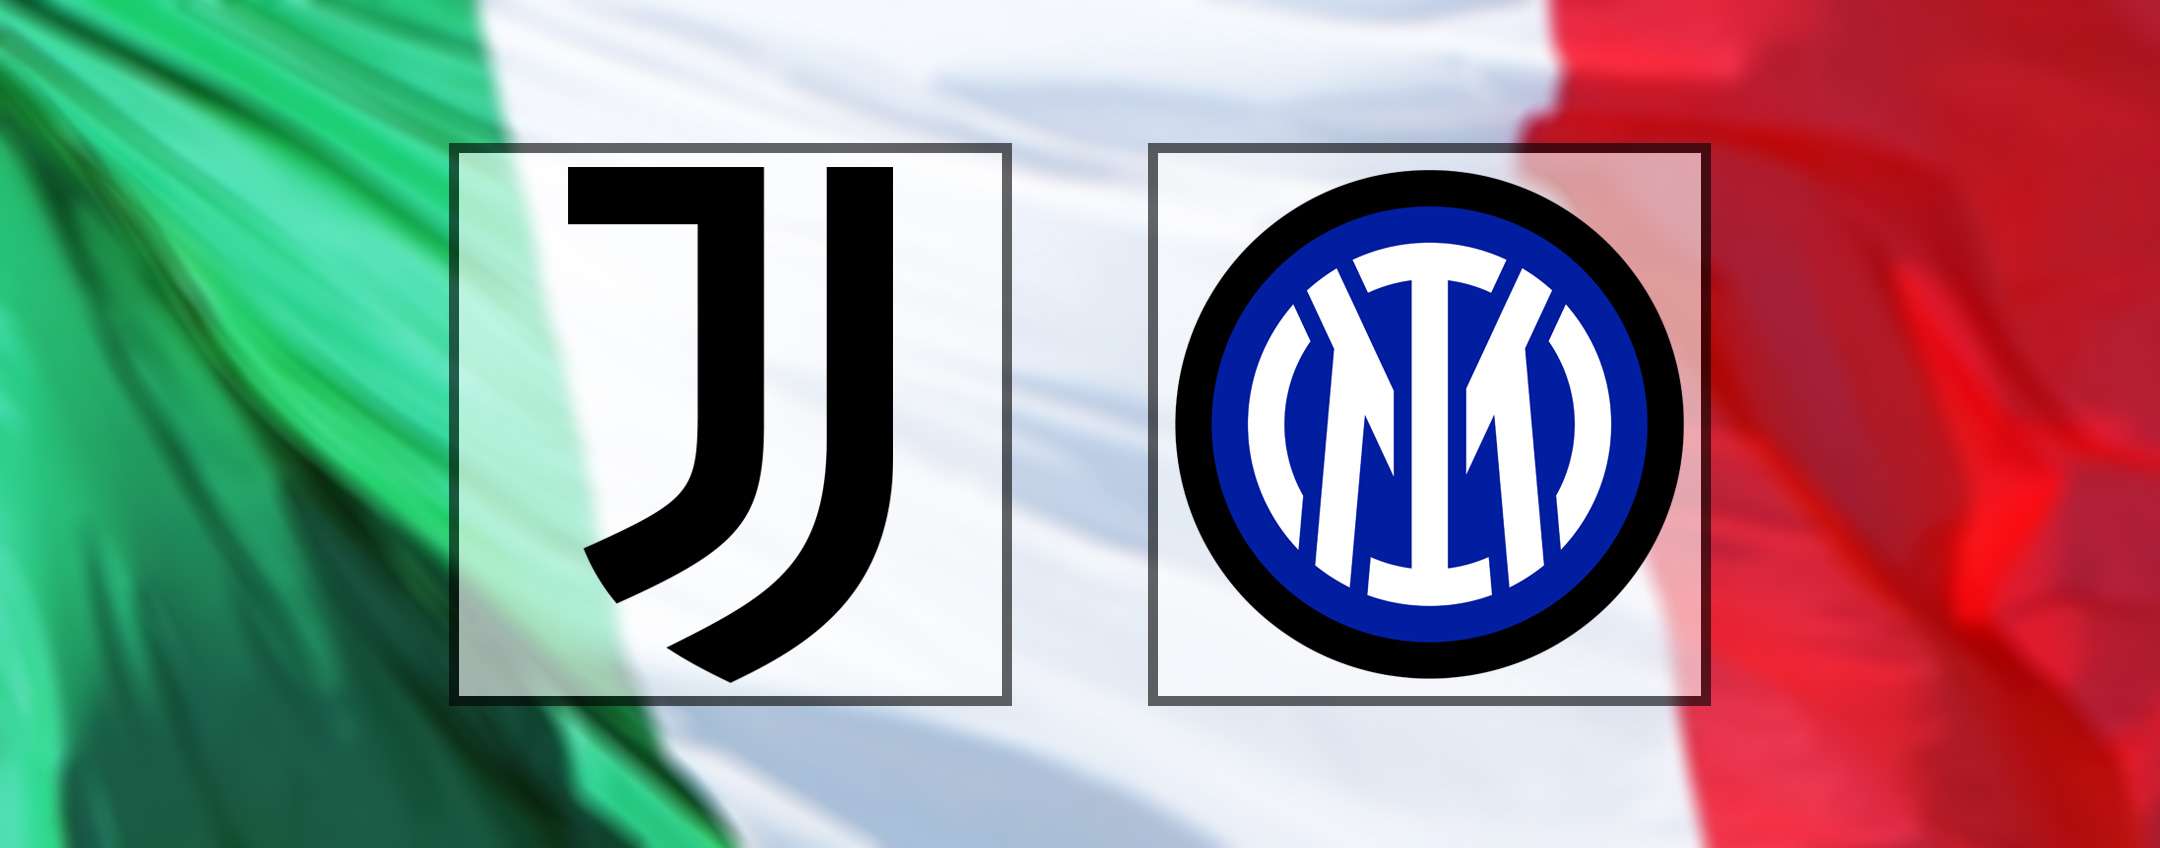 come vedere Juventus-Inter in diretta streaming gratis